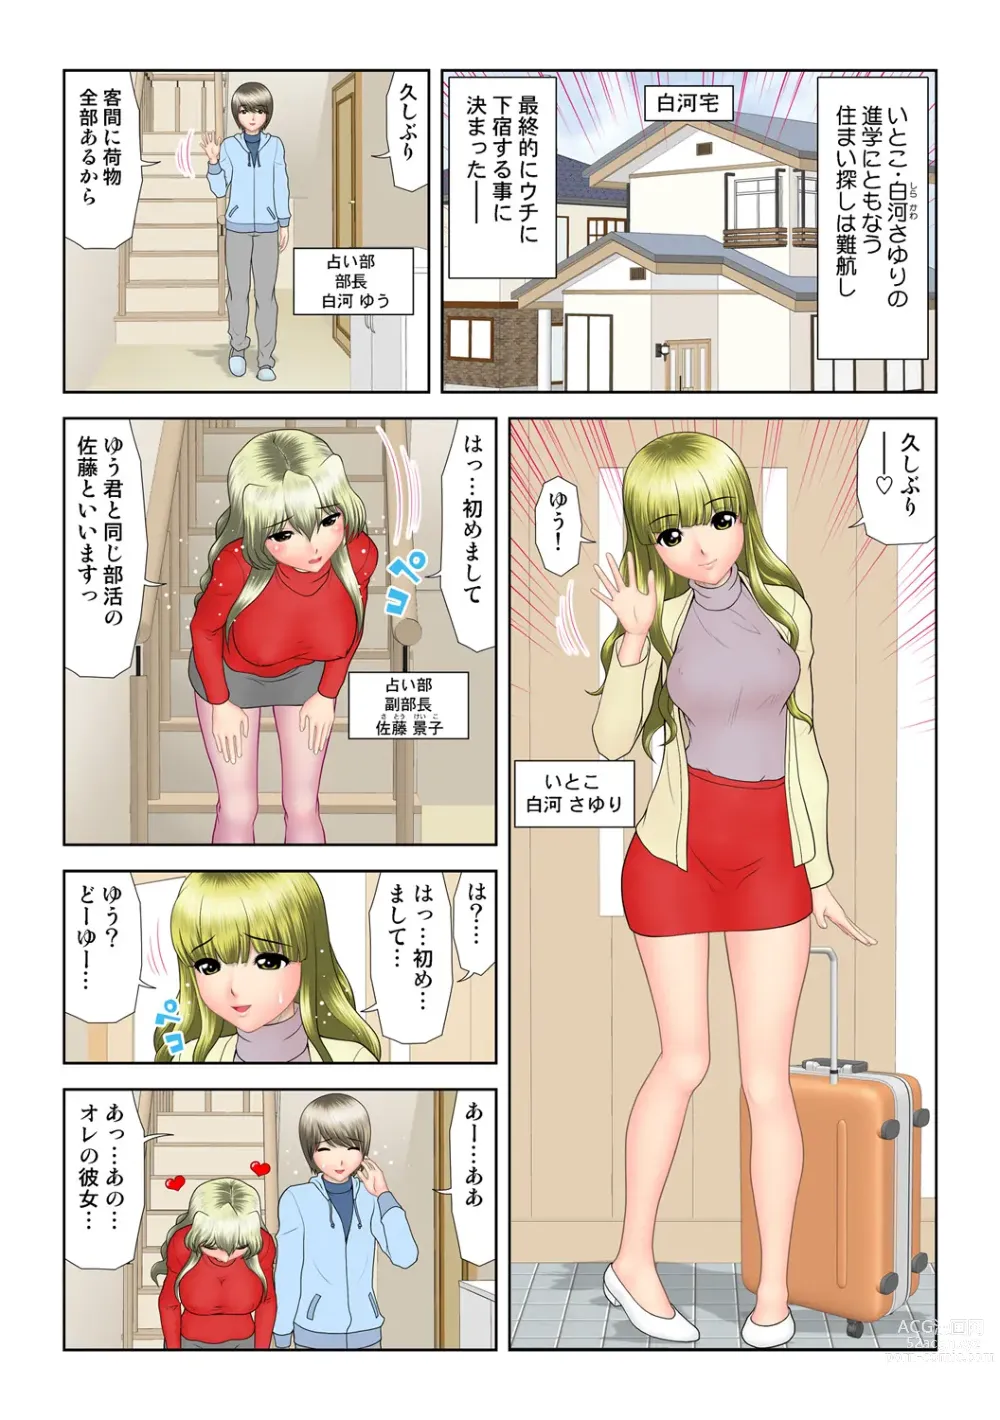 Page 115 of manga HiME-Mania Vol. 54